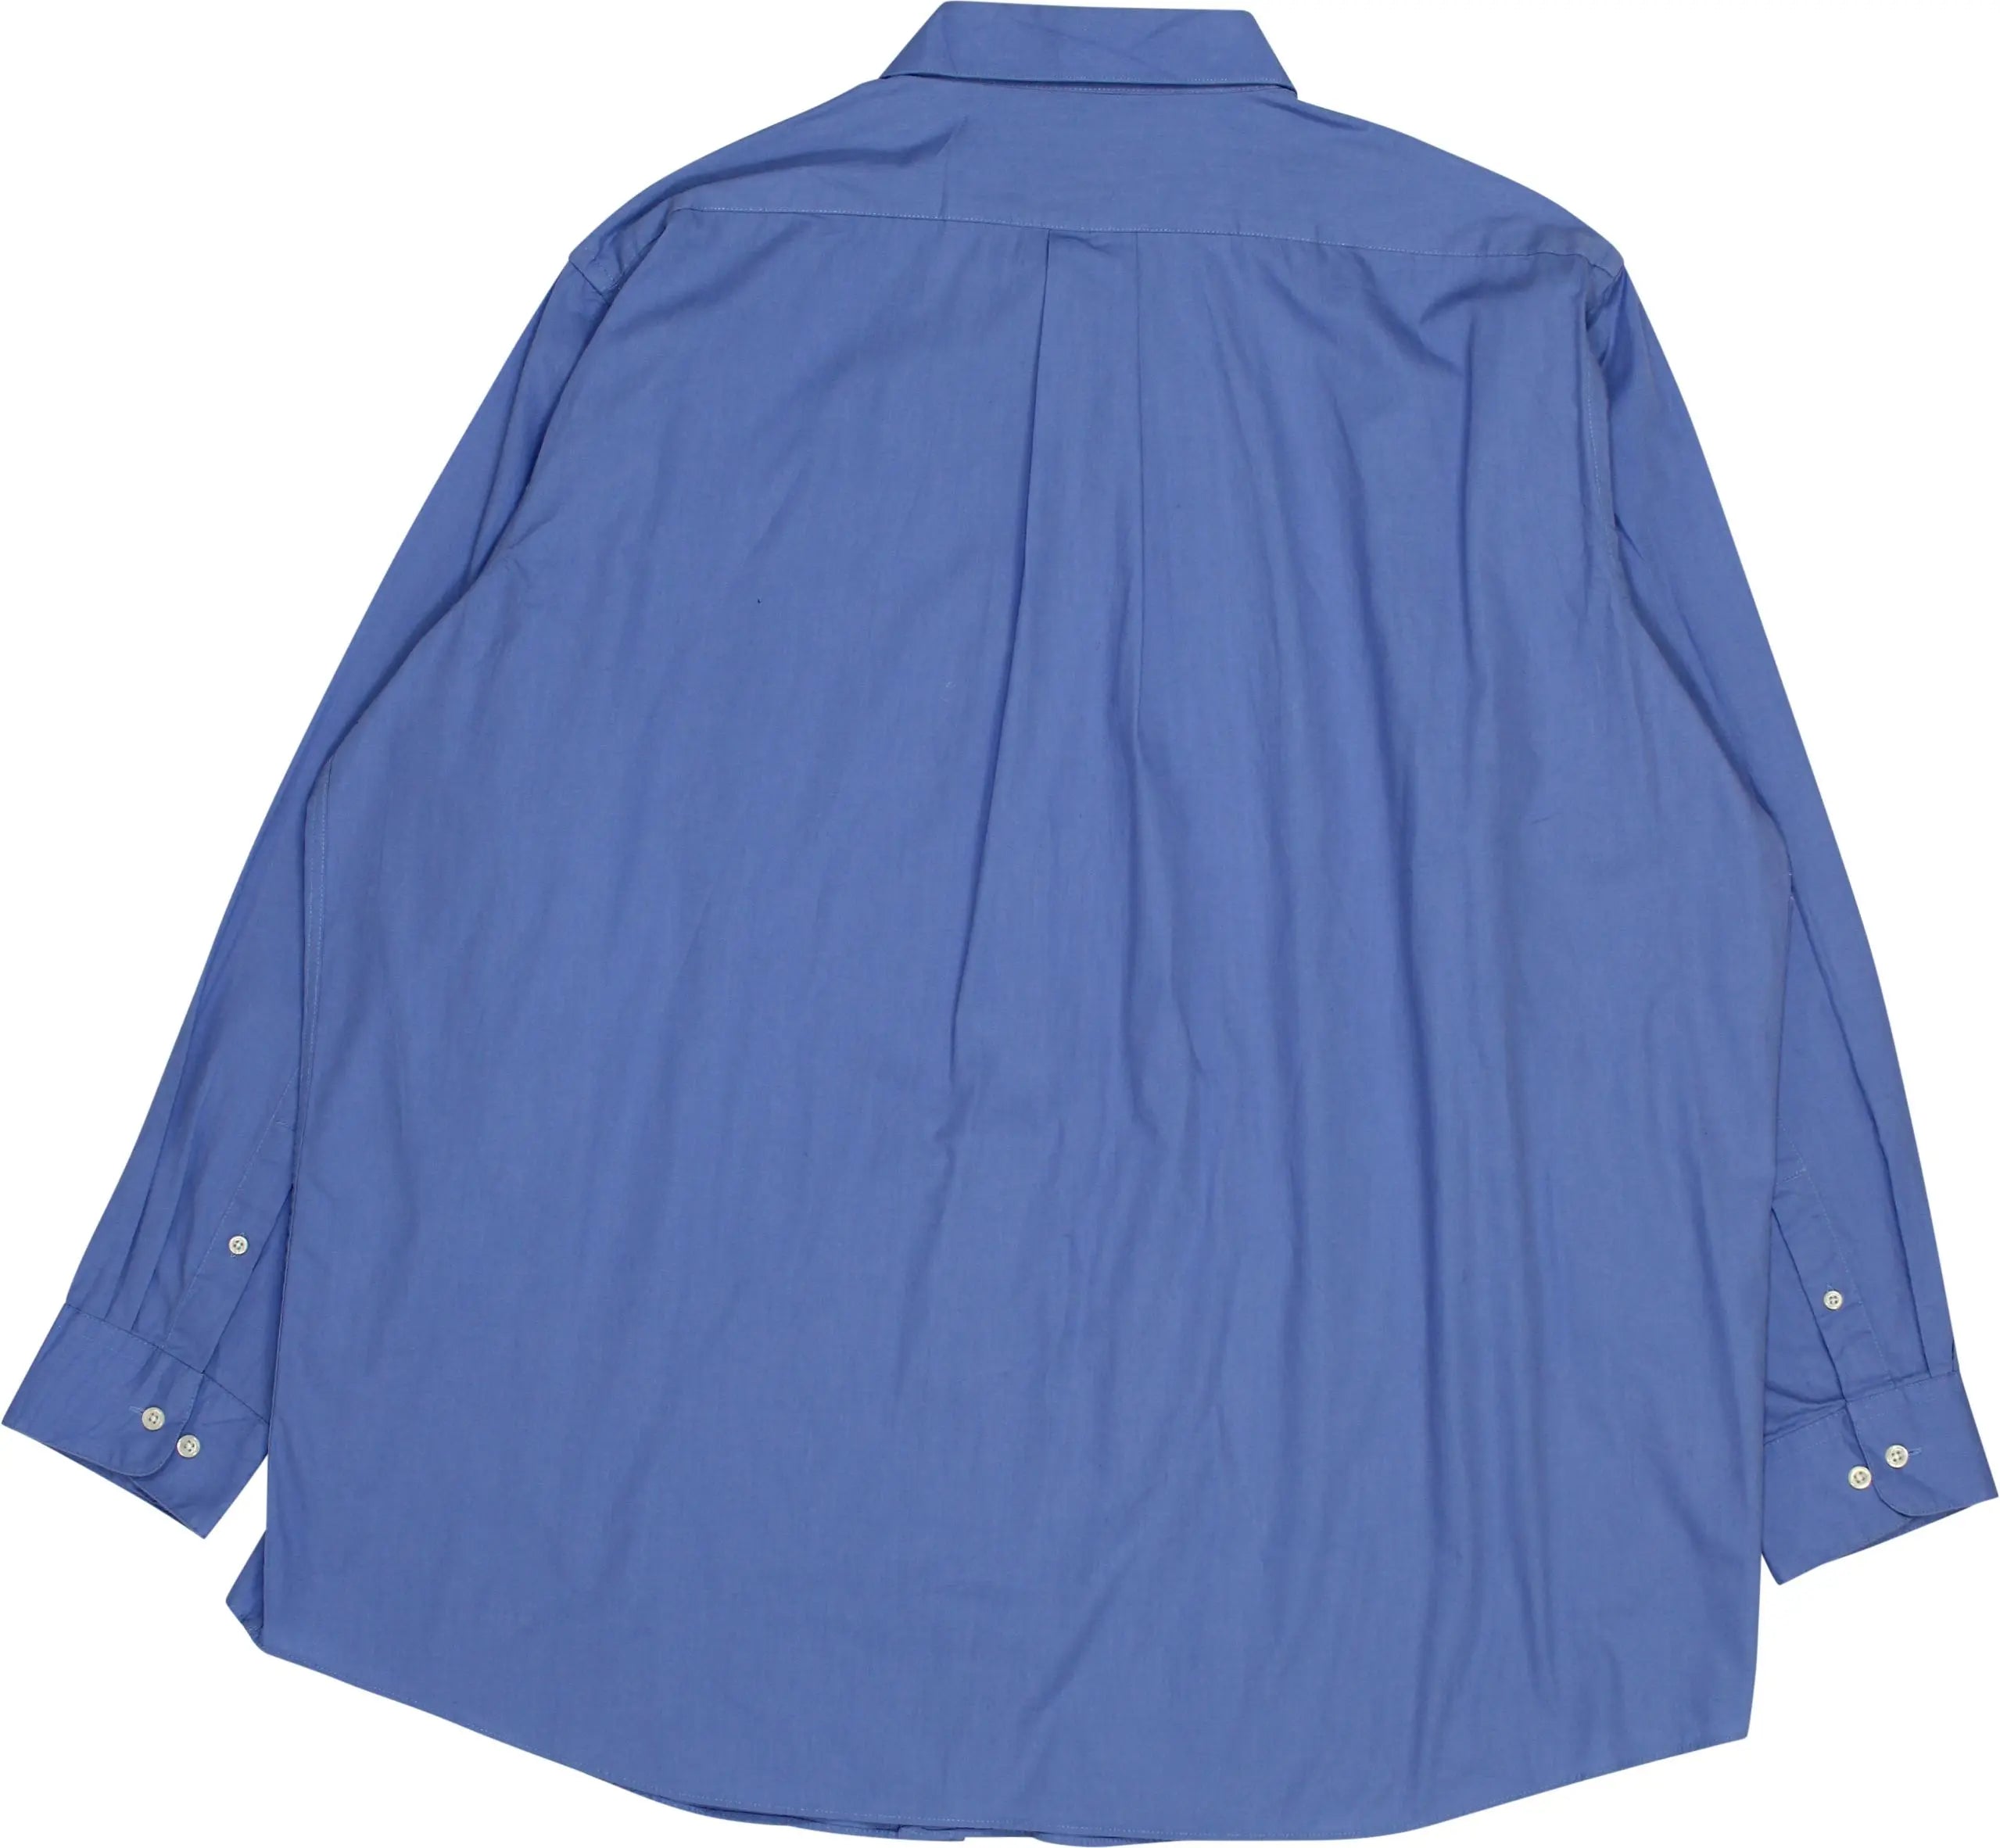 Alexander Julian - Blue shirt- ThriftTale.com - Vintage and second handclothing